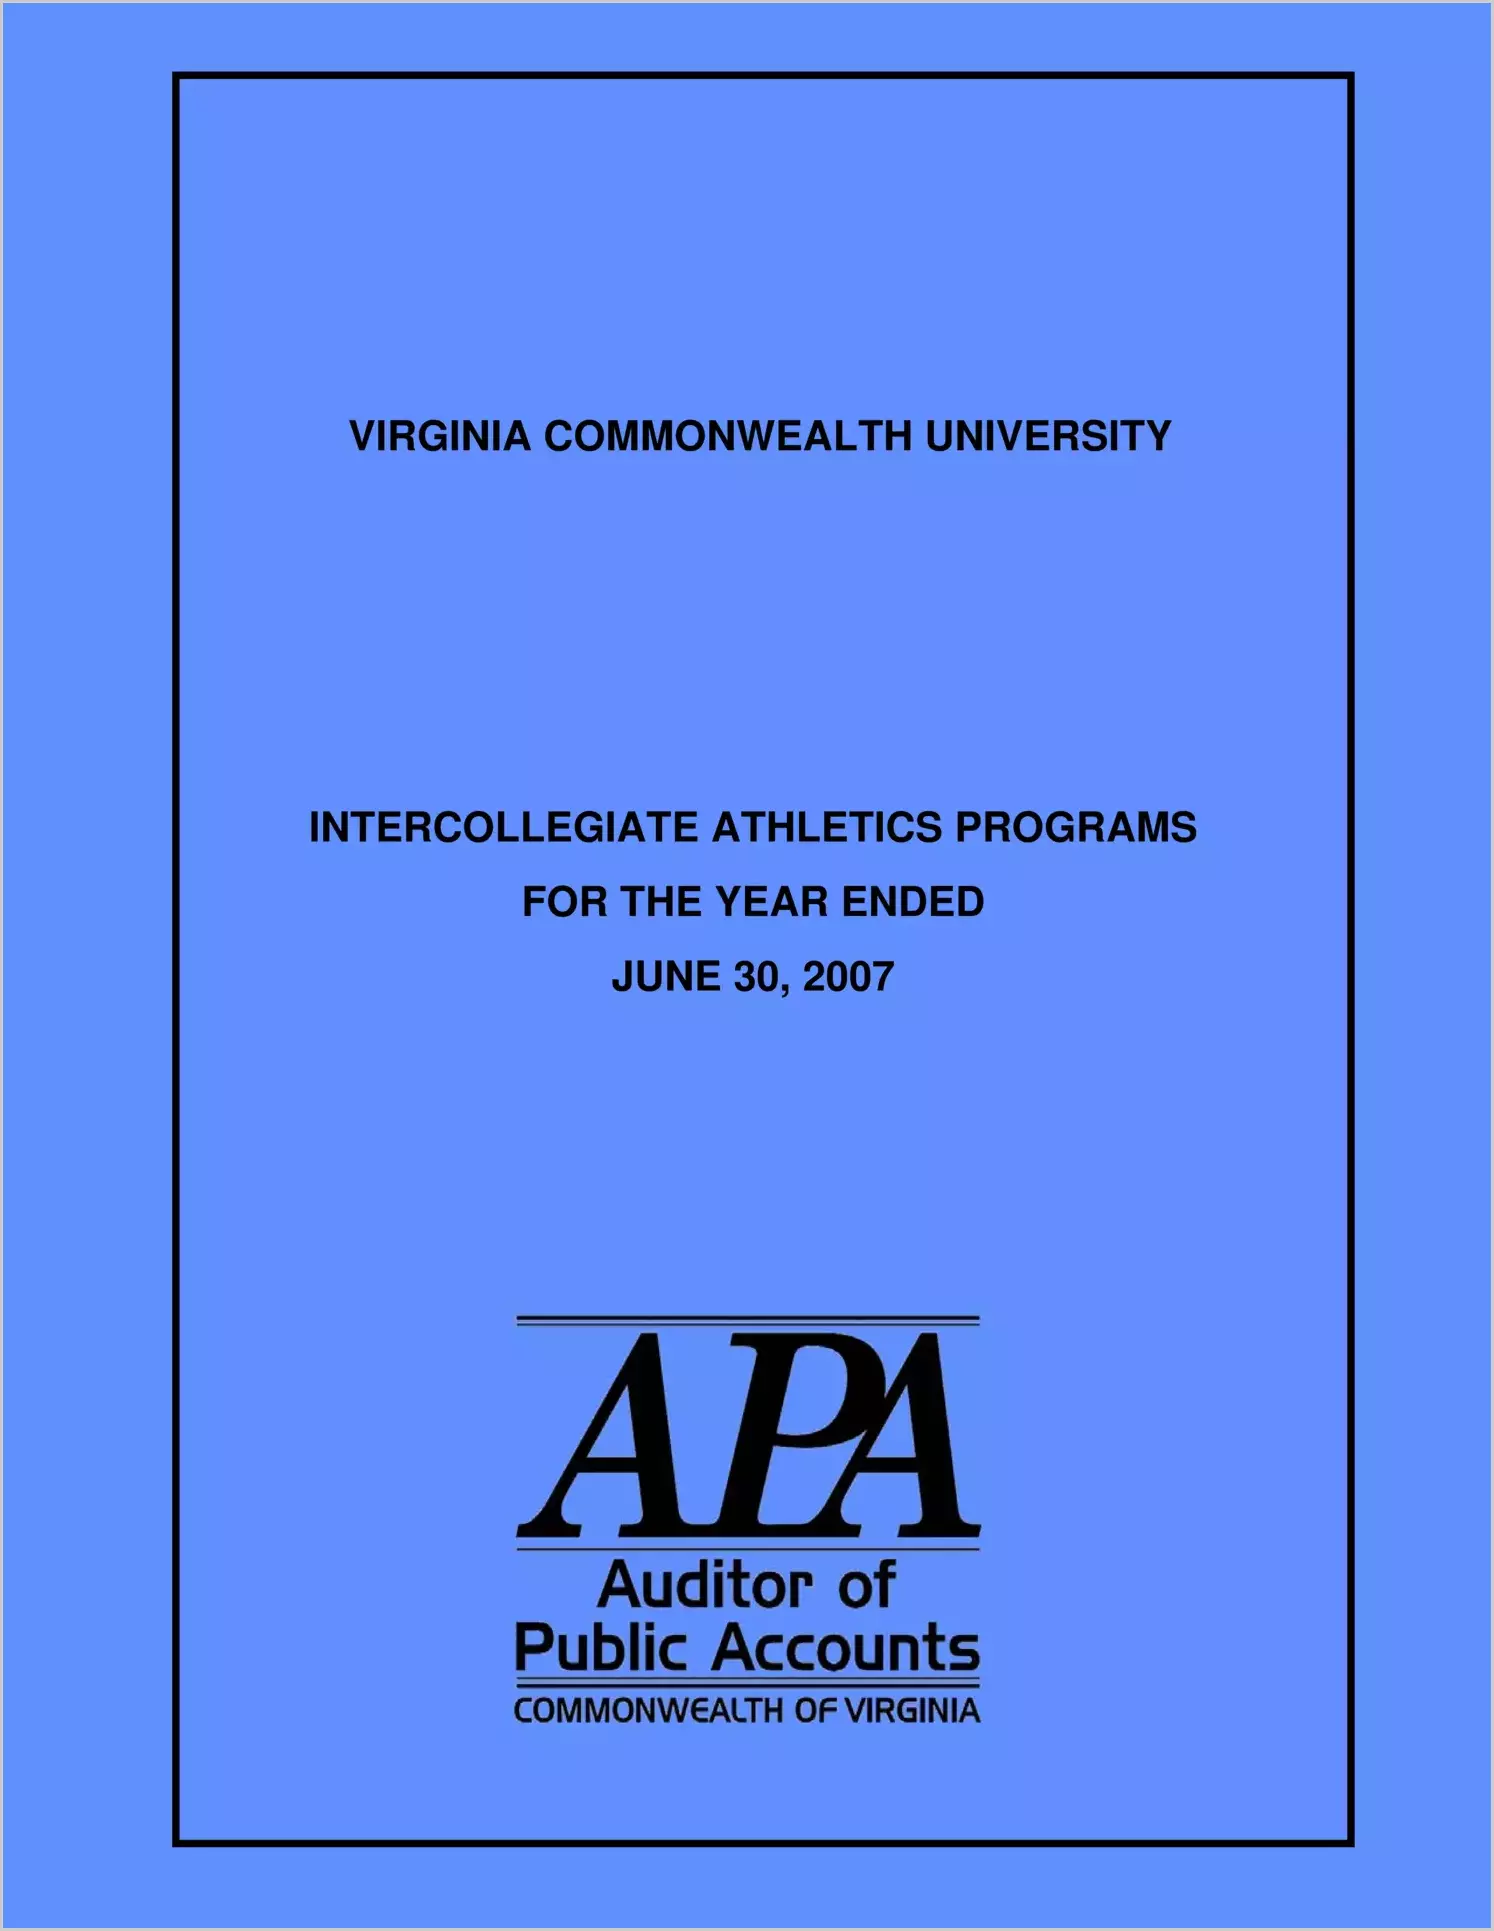 Virginia Commonwealth University Intercollegiate Athletics Programs for the year ended June 30, 2007